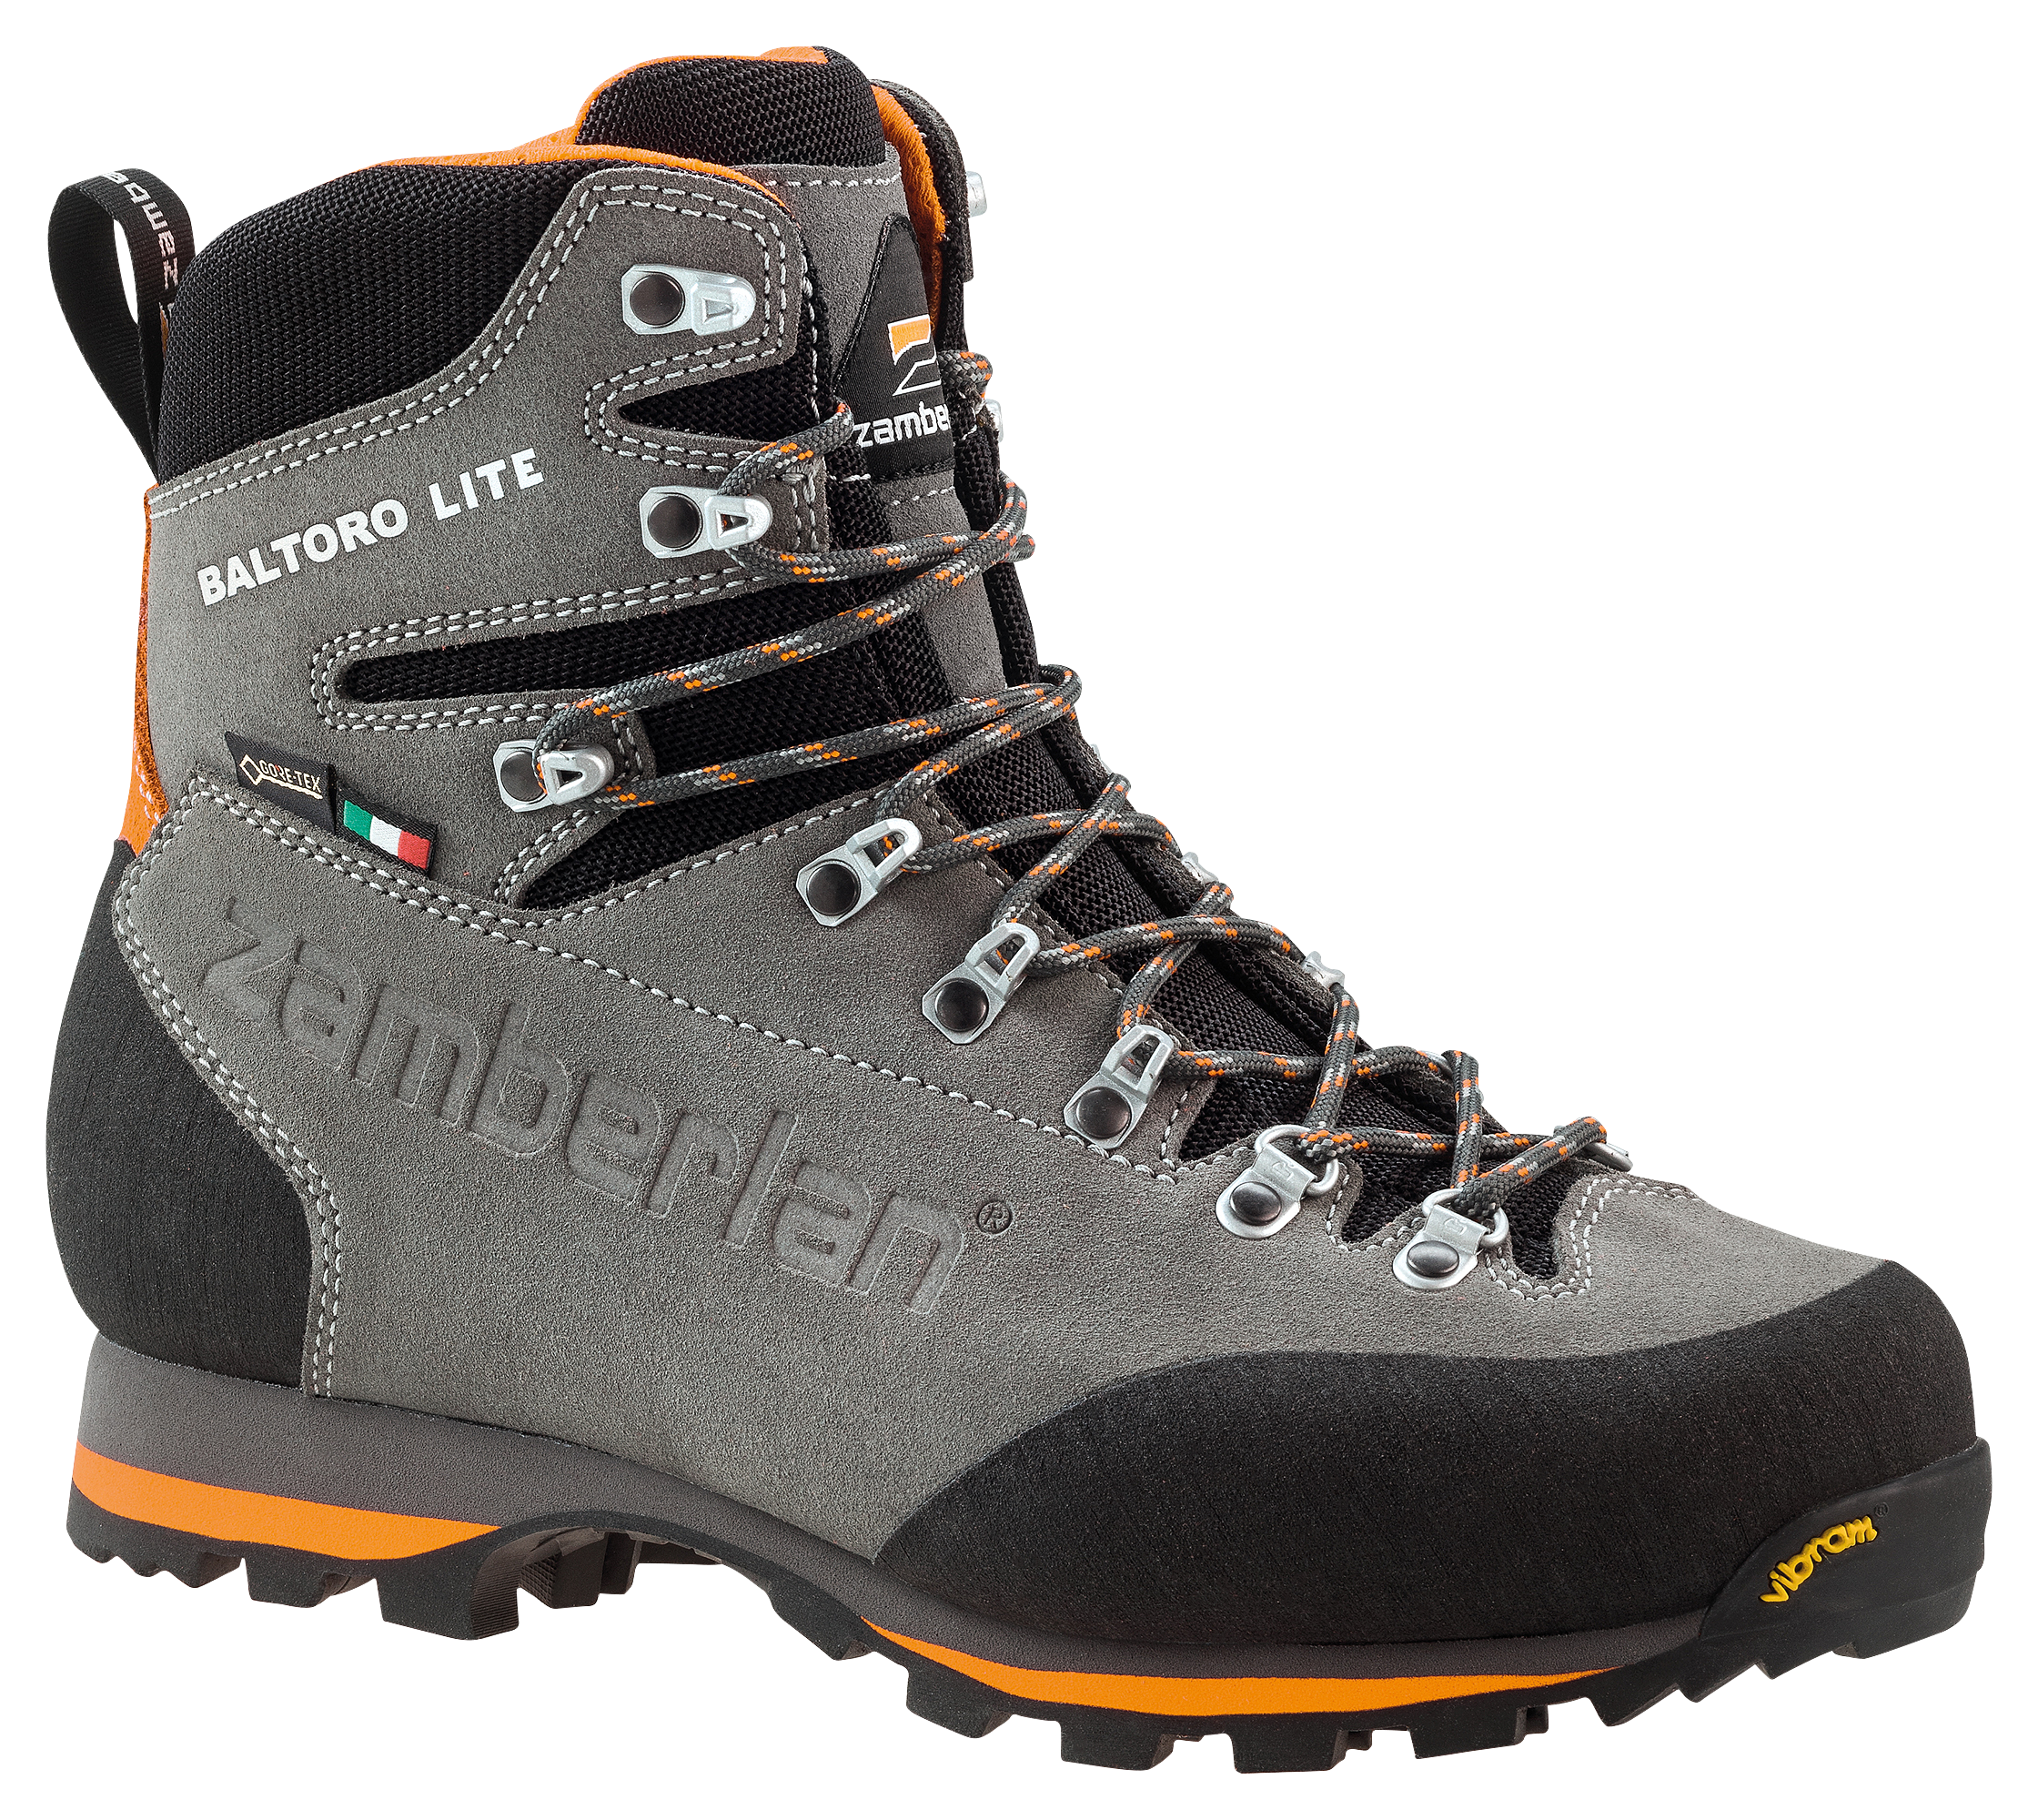 Zamberlan 1110 Baltoro Lite GTX RR Waterproof Hiking Boots for Men - Graphite/Black - 11M